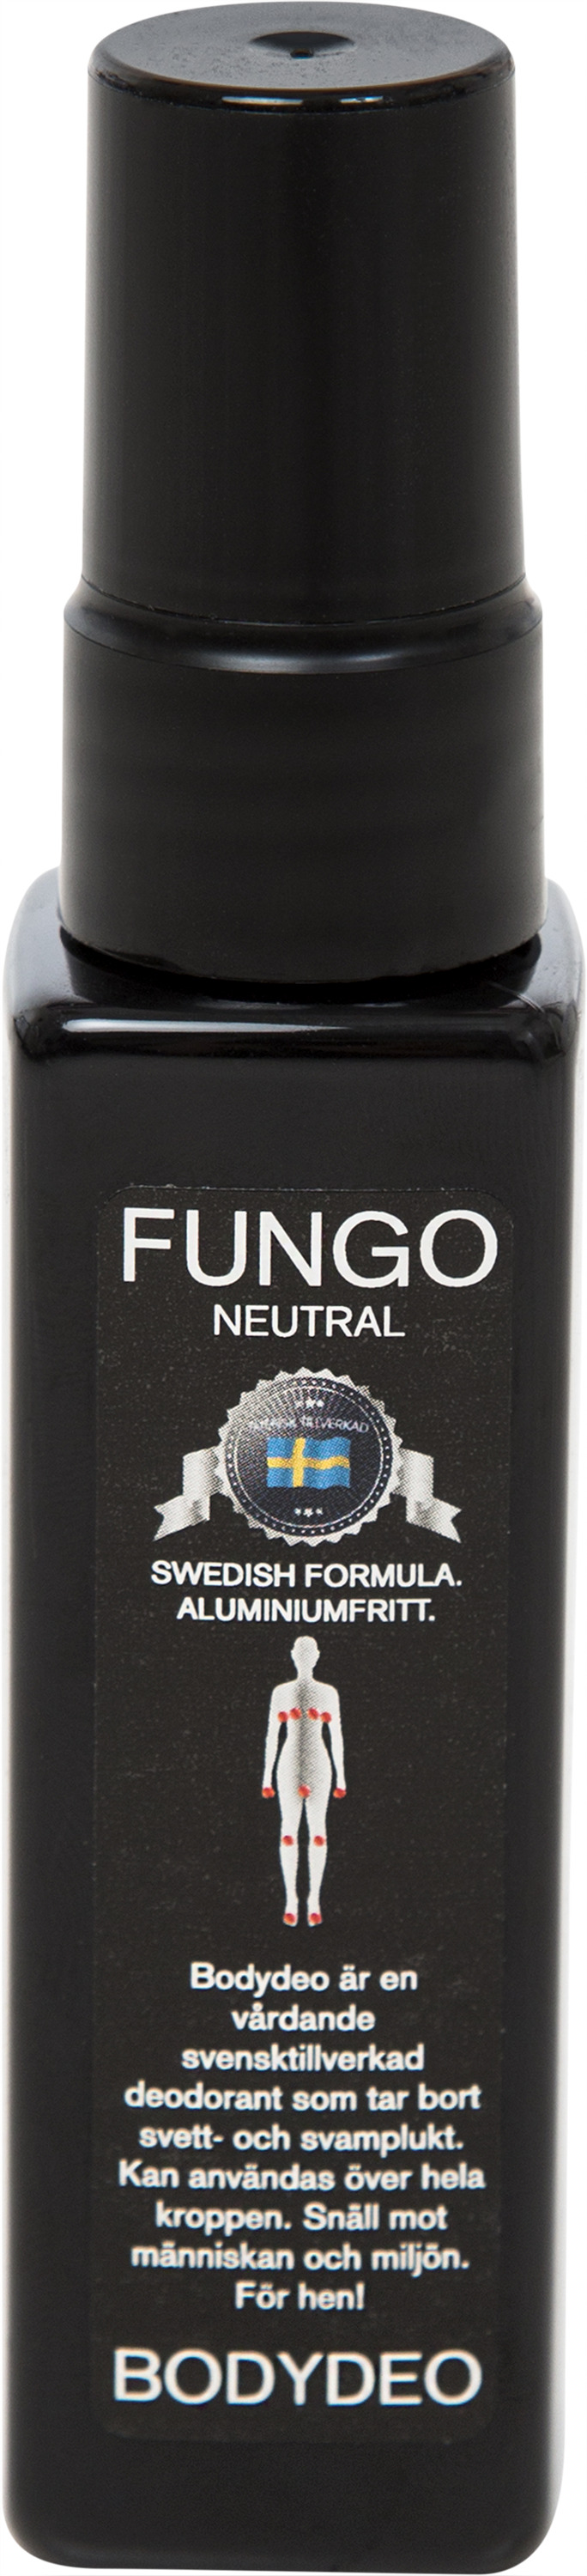 Fungo Bodydeo Kroppsdeodorant 69 g